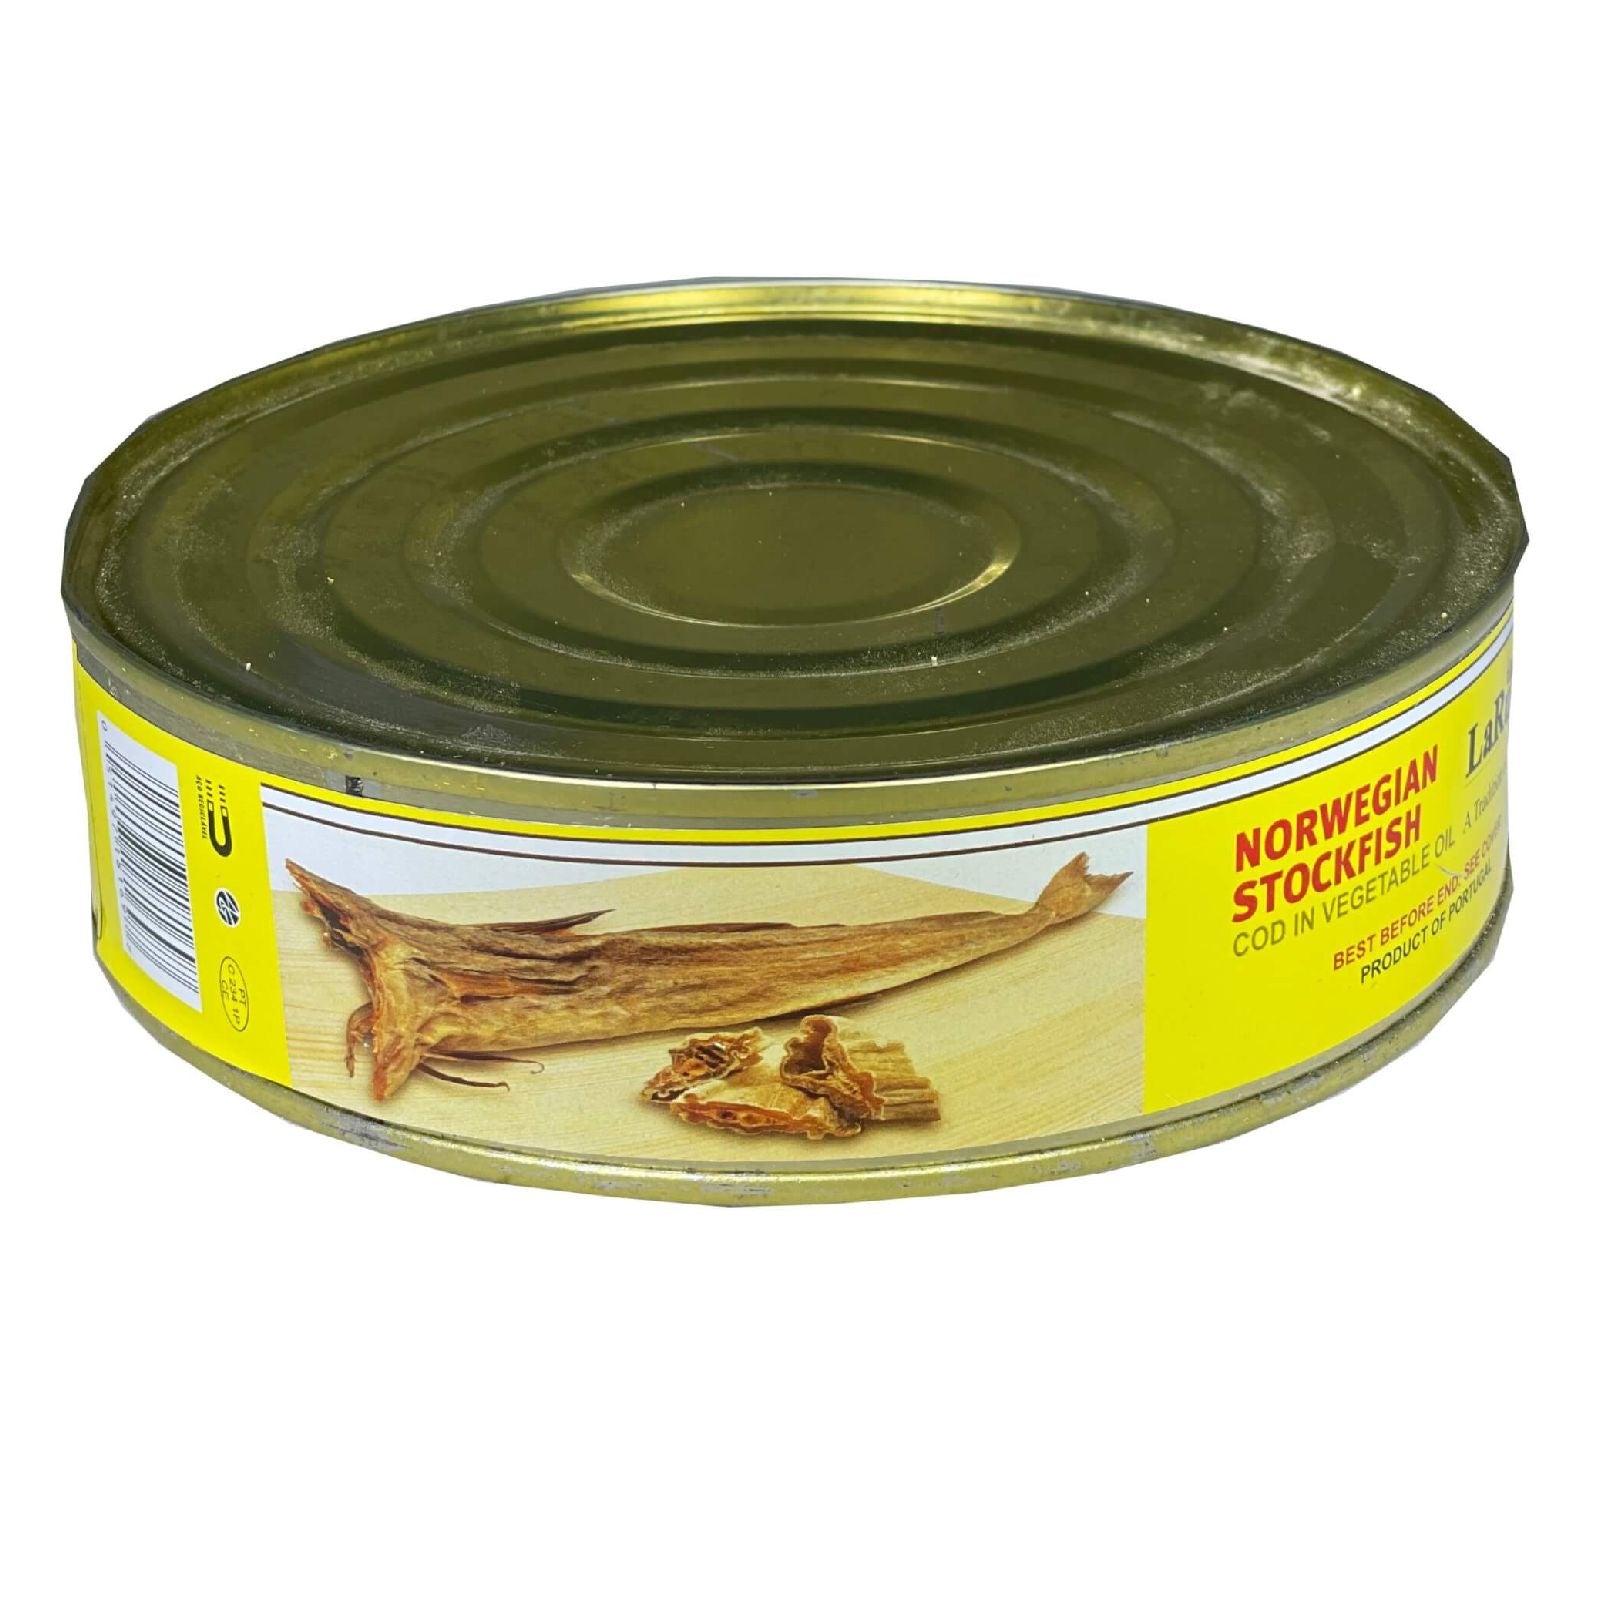 Norwegian Stockfish (Round Cod, 40-60cm Long): 25-lbs Value Pack (15-25  Medium Stockfish, Totally Cut)